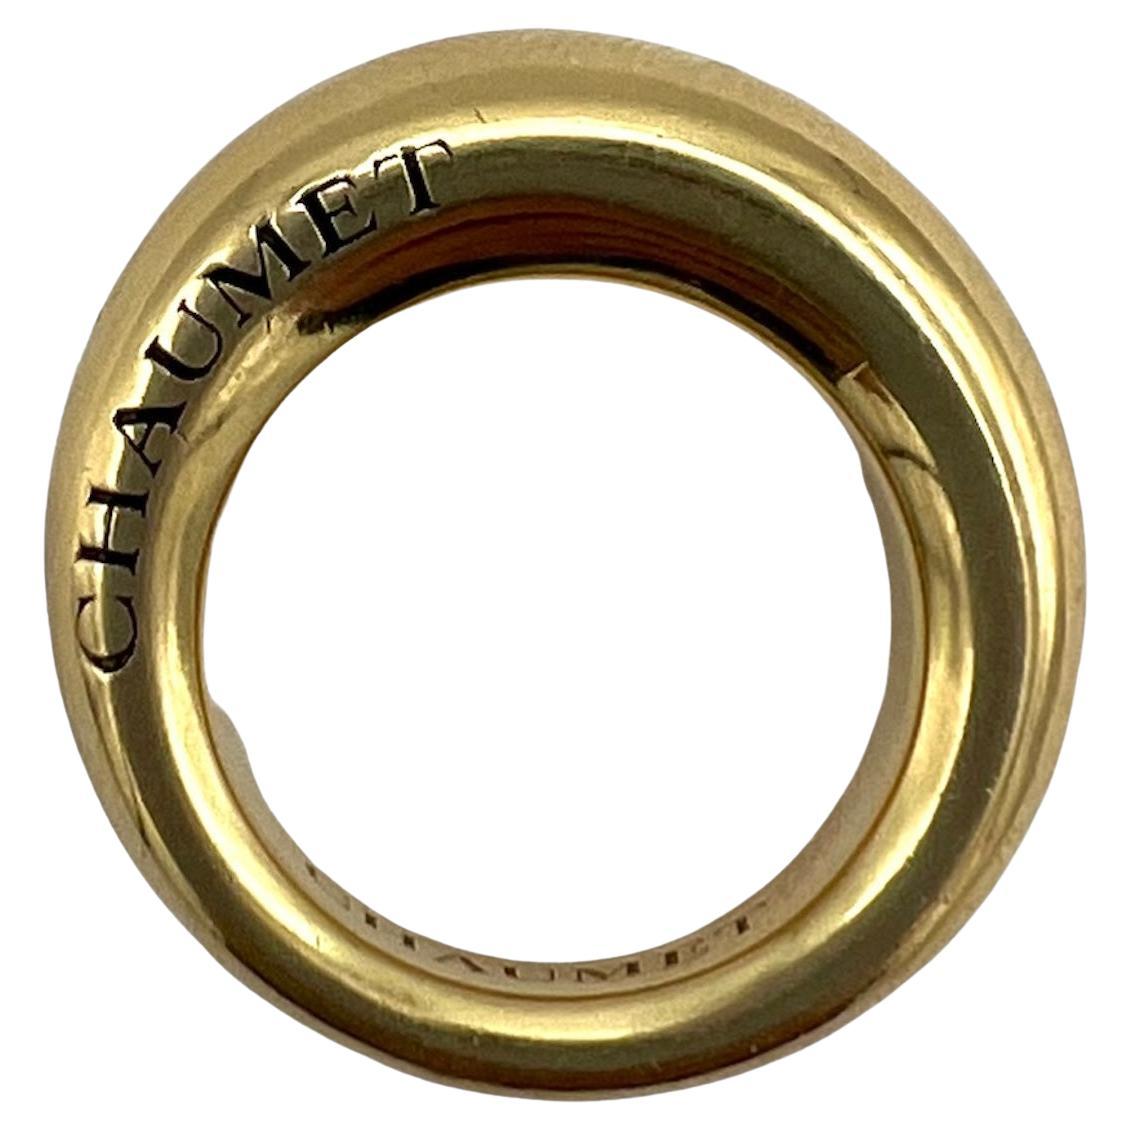 Chaumet Paris 18k Gold Band Ring